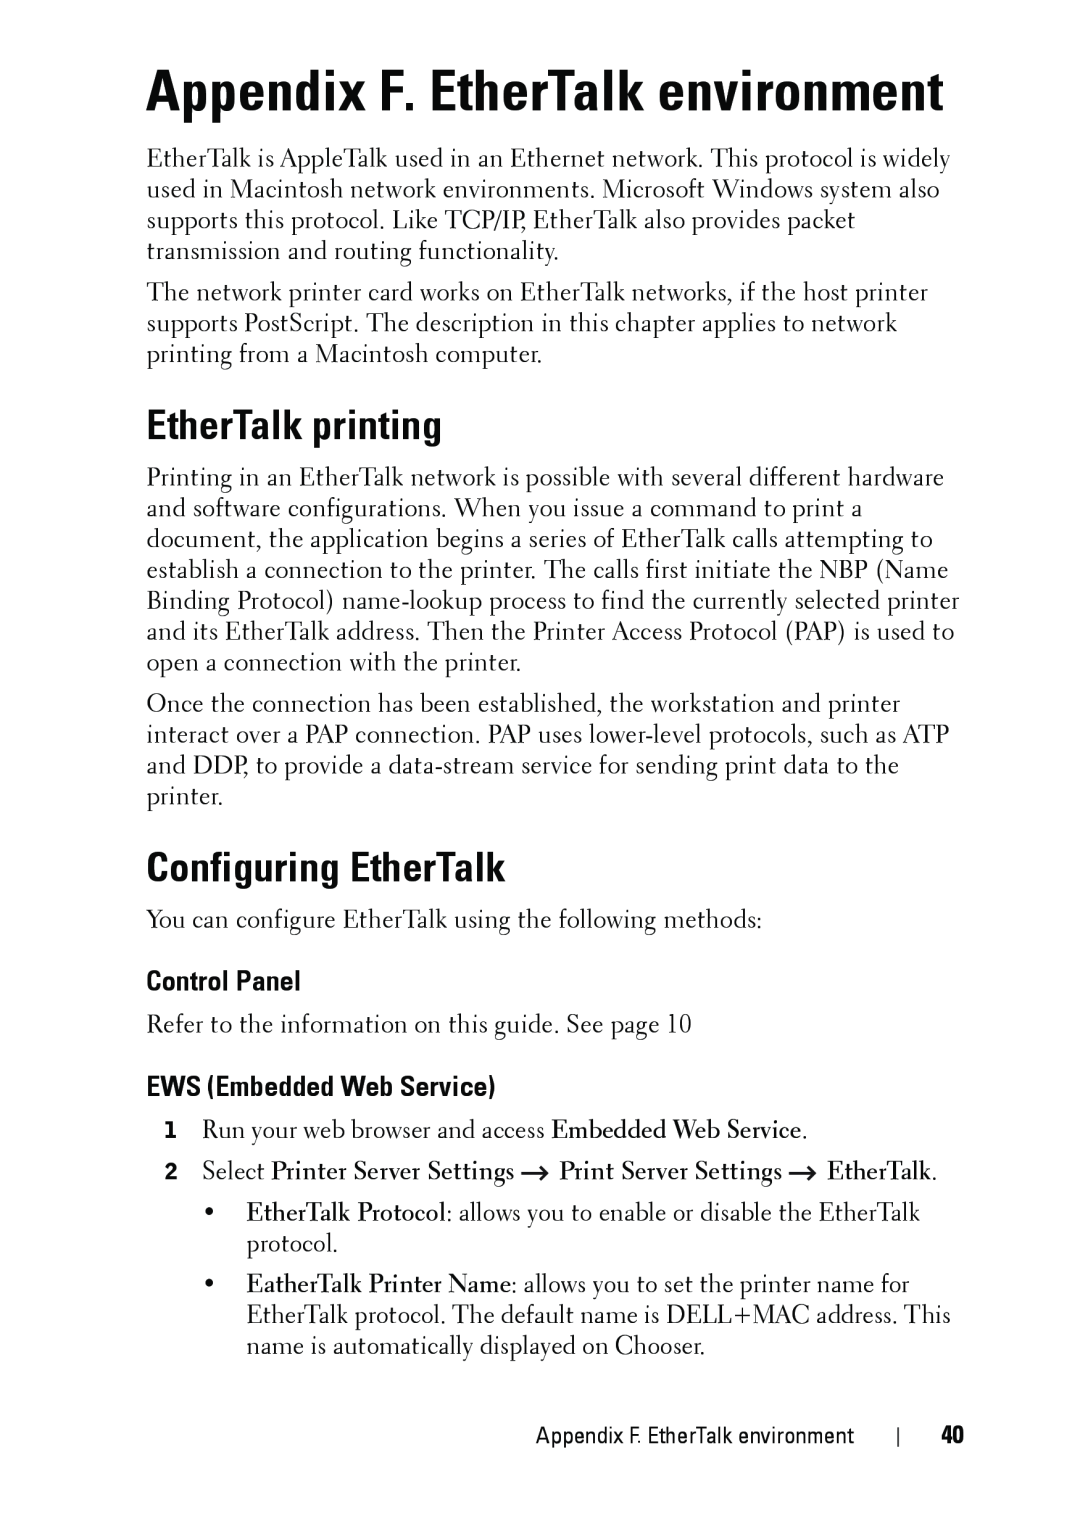 Dell 5002 manual EtherTalk printing, Configuring EtherTalk, Control Panel, EWS Embedded Web Service 